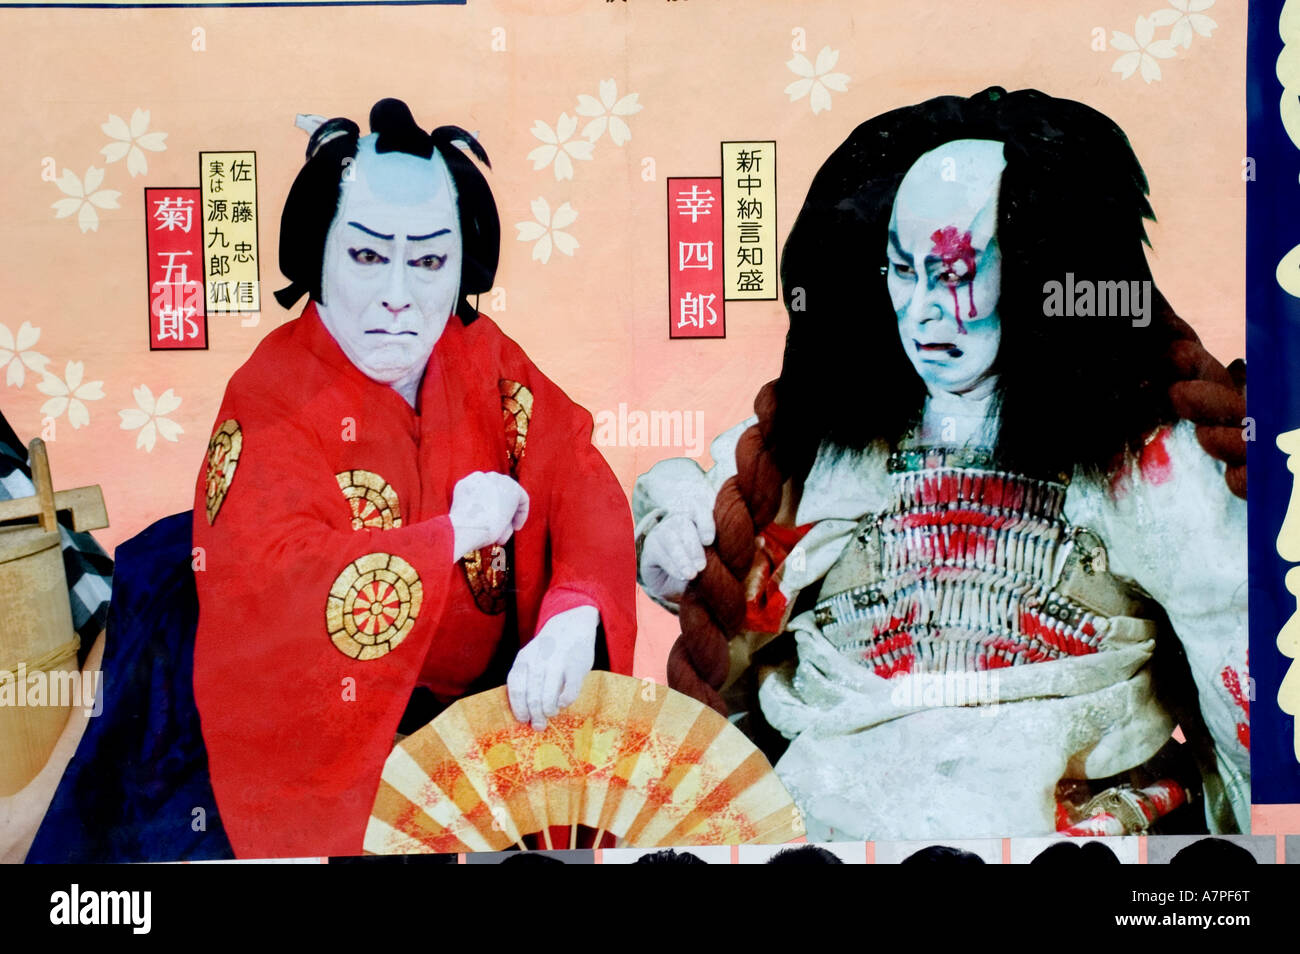 Tokio-Kabuki-Za in Ginza Theater Schauspieler Spieler handeln Szene Theaterbühne Stockfoto